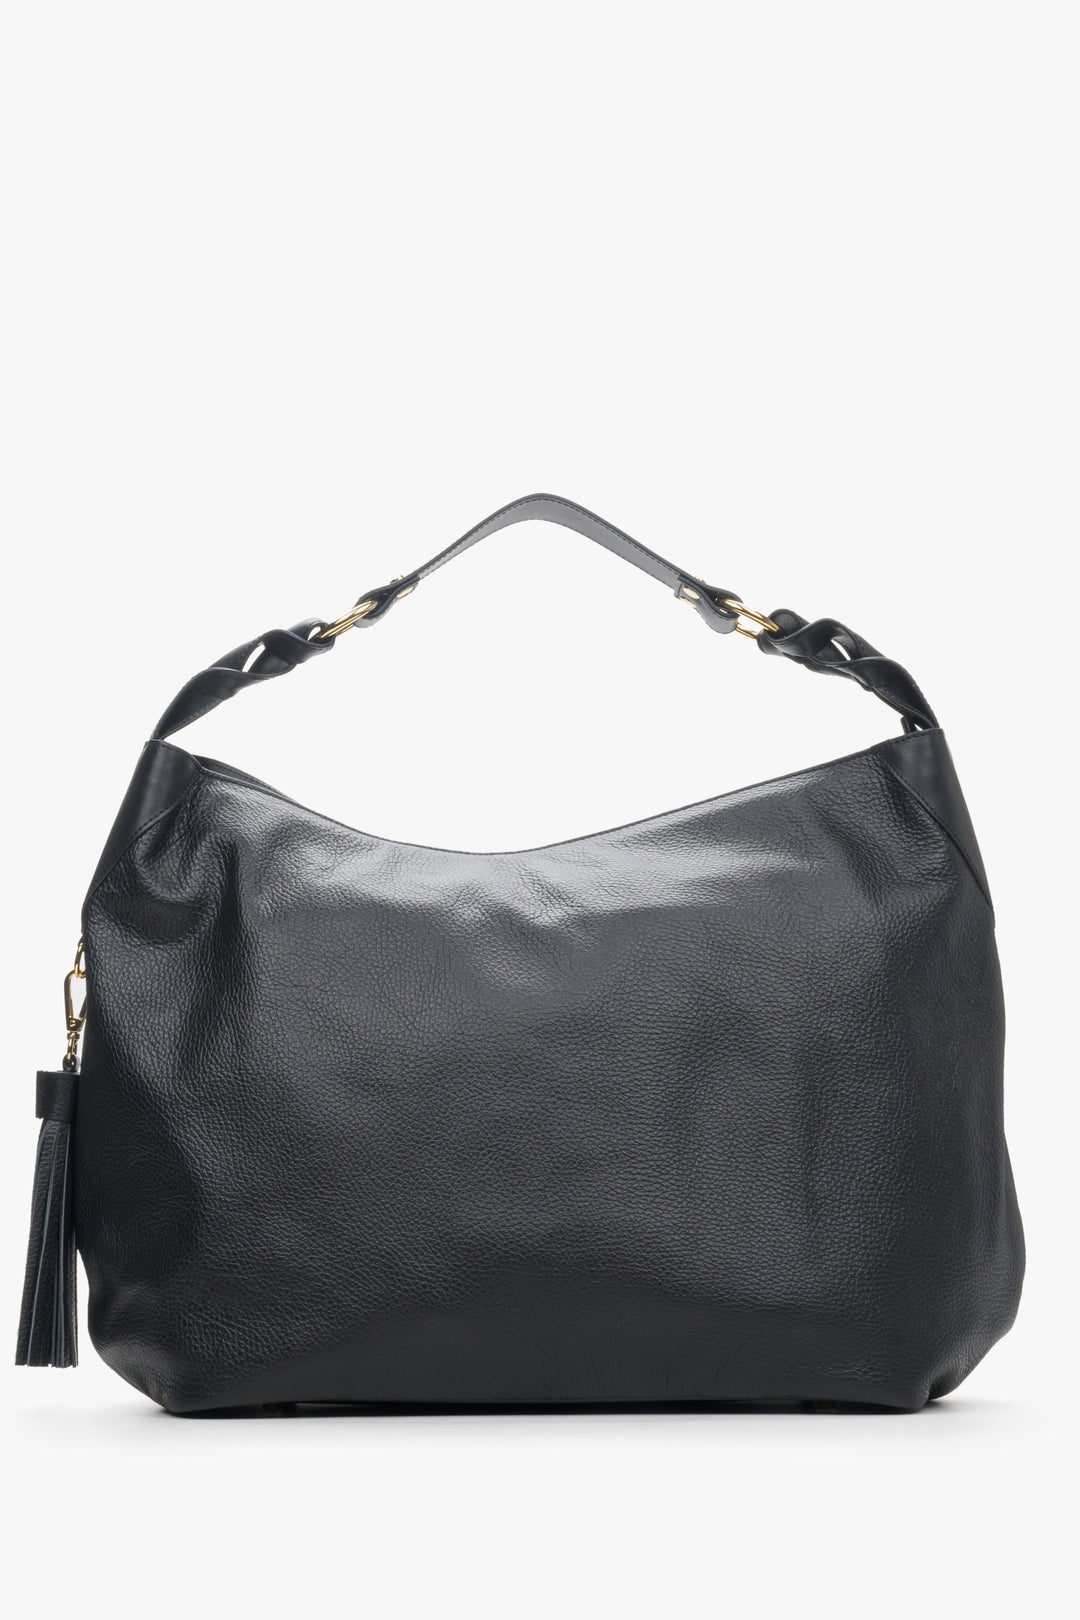 Women's black leather hobo bag by Estro.